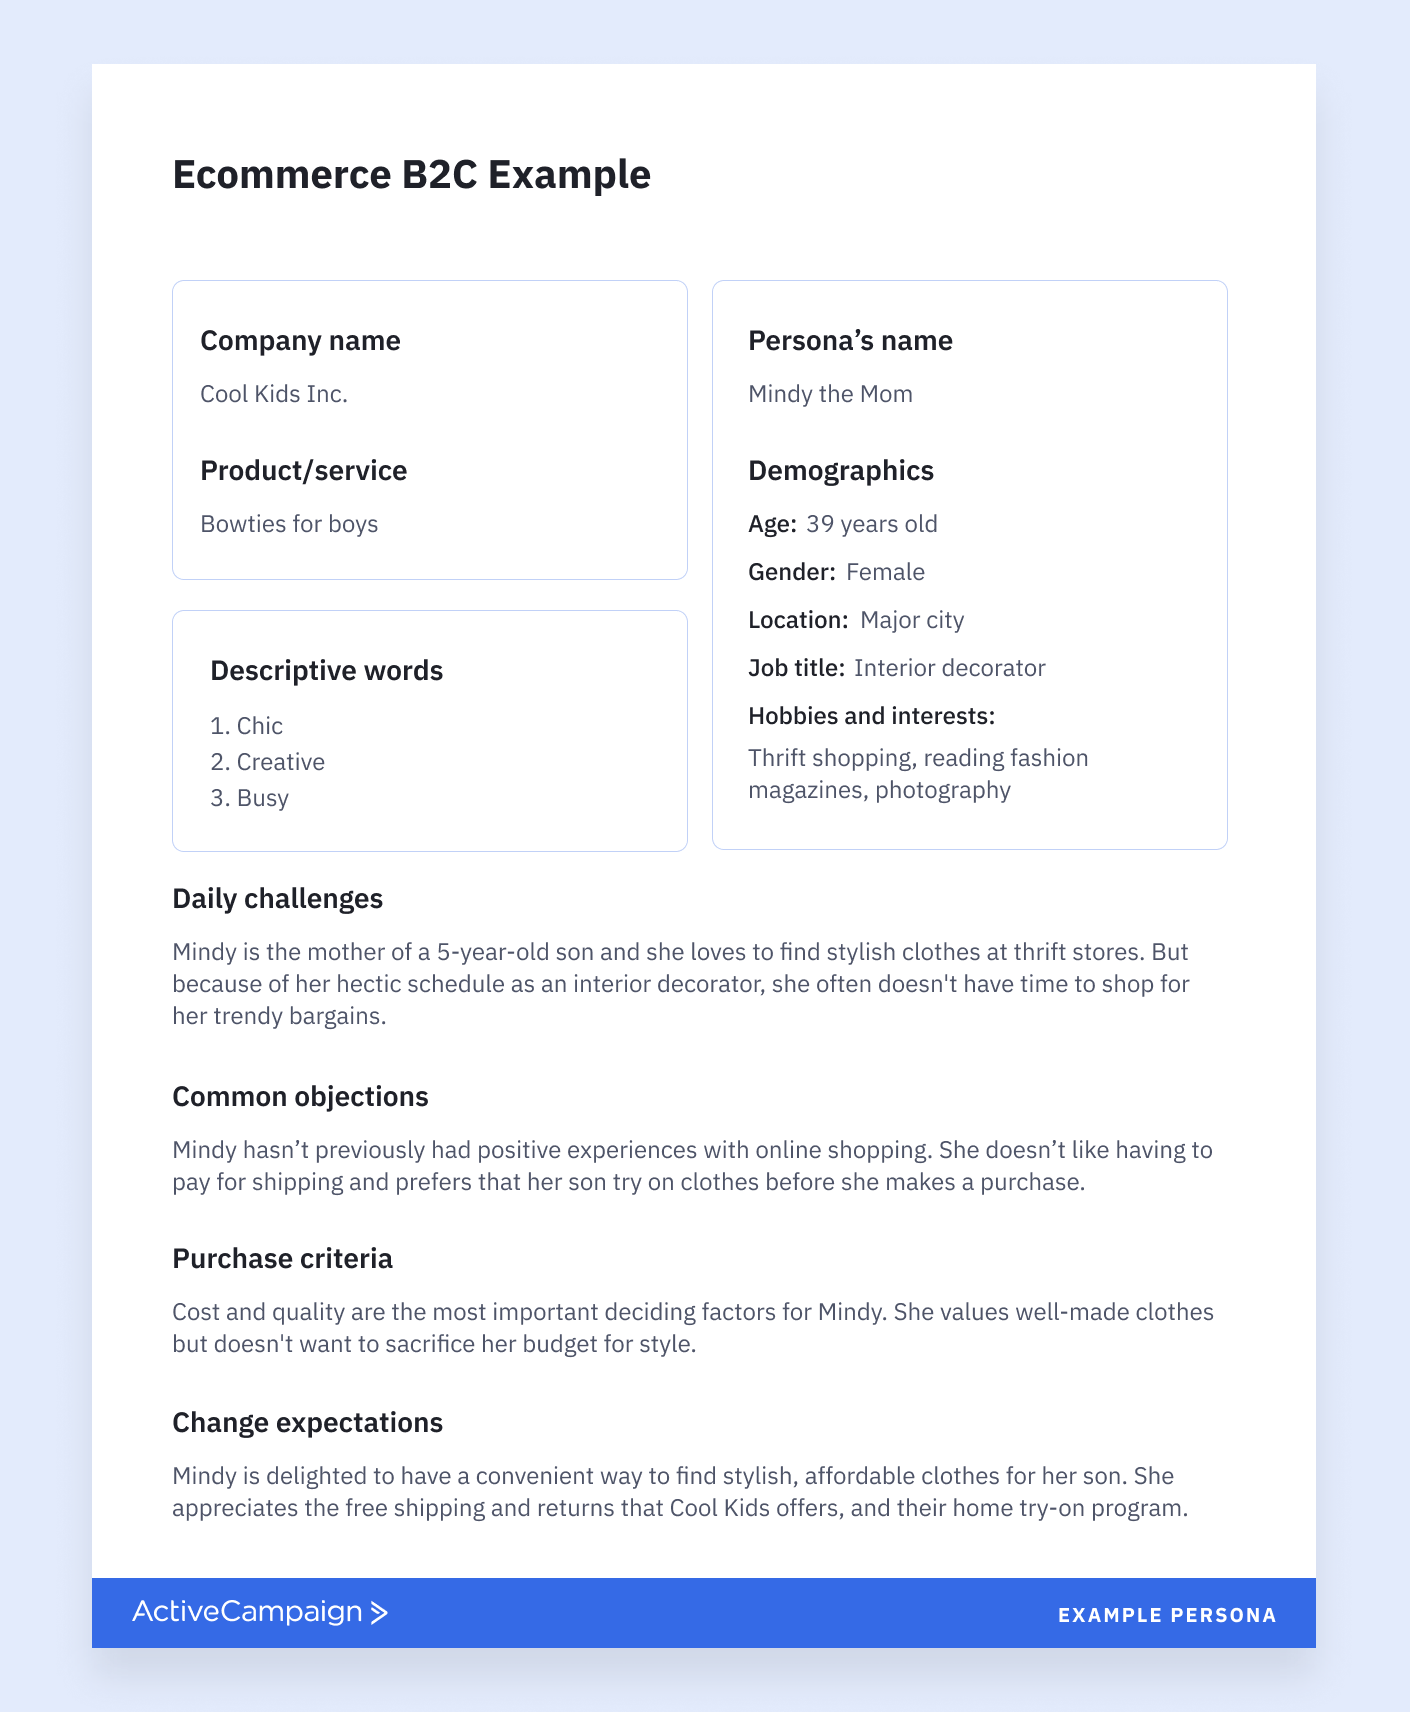 Ecommerce B2C buyer persona example